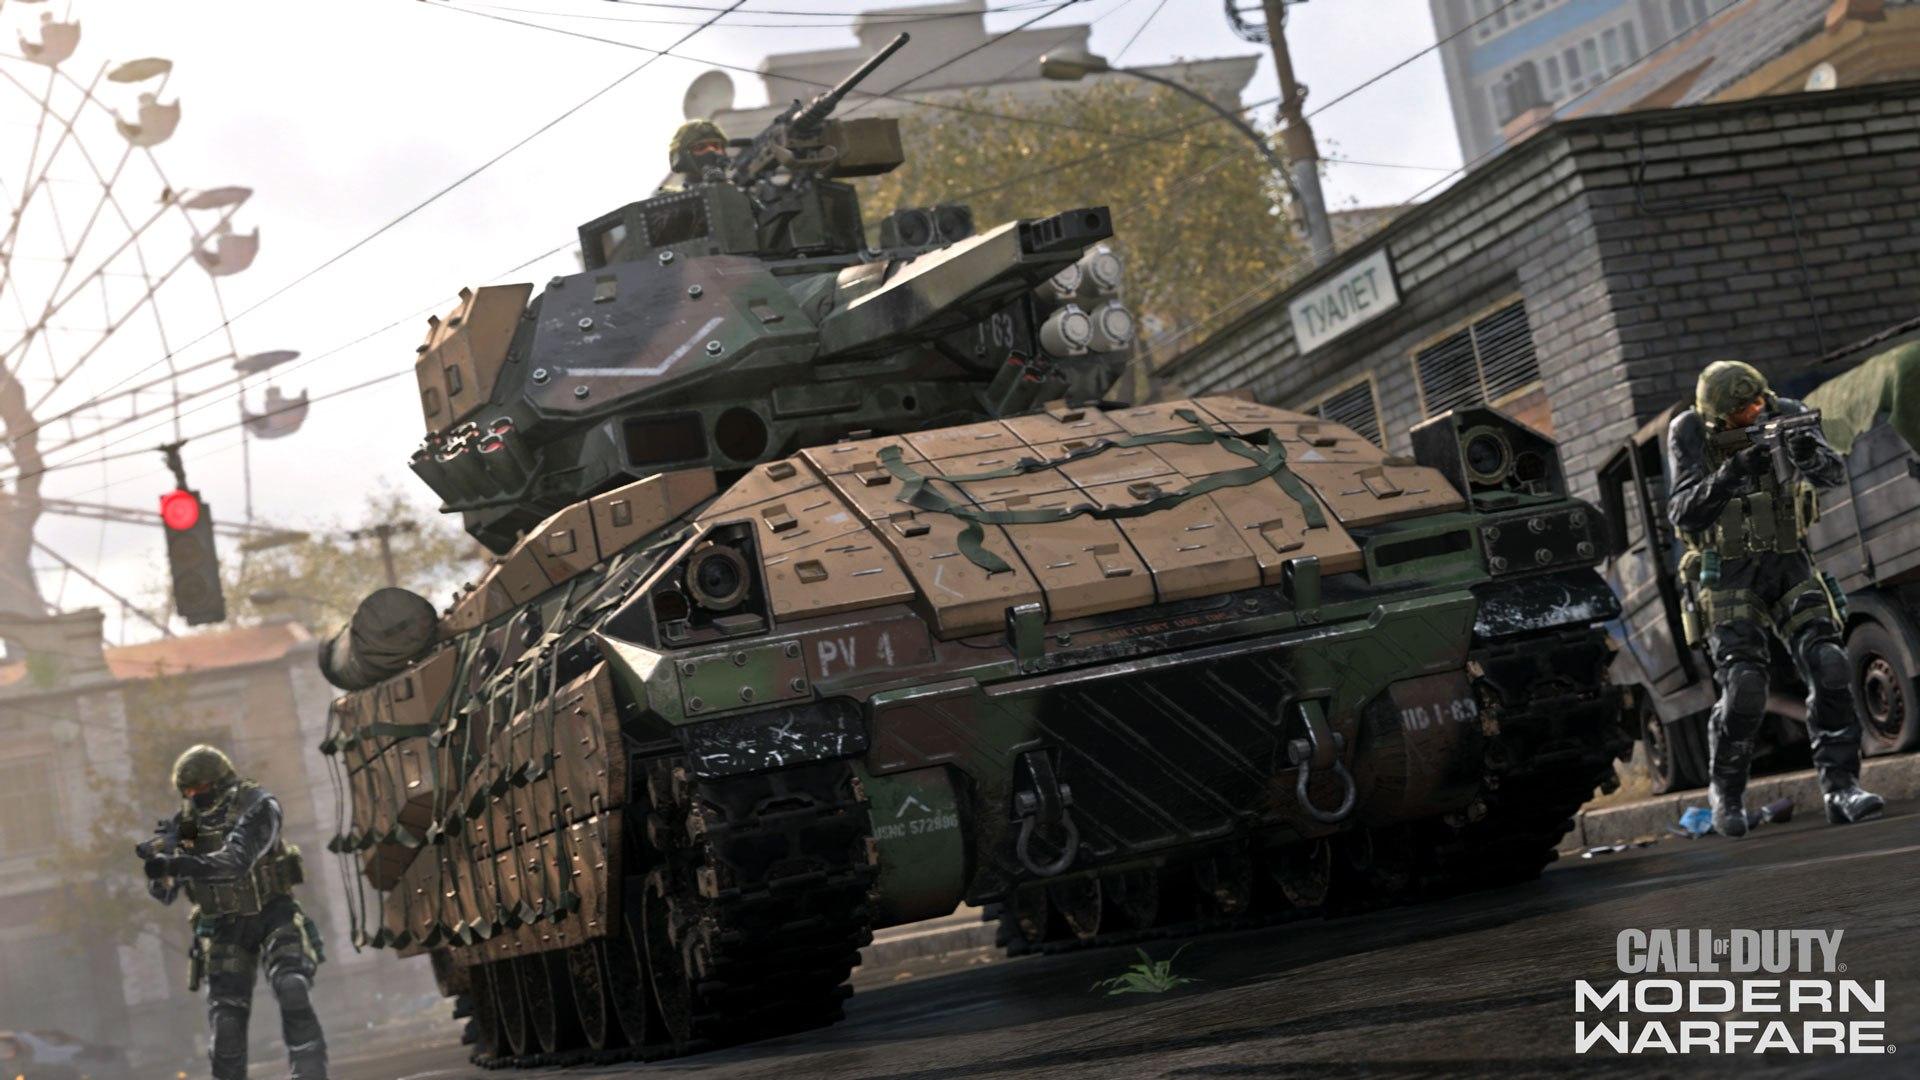 Call of Duty: Modern Warfare multiplayer impressions - A